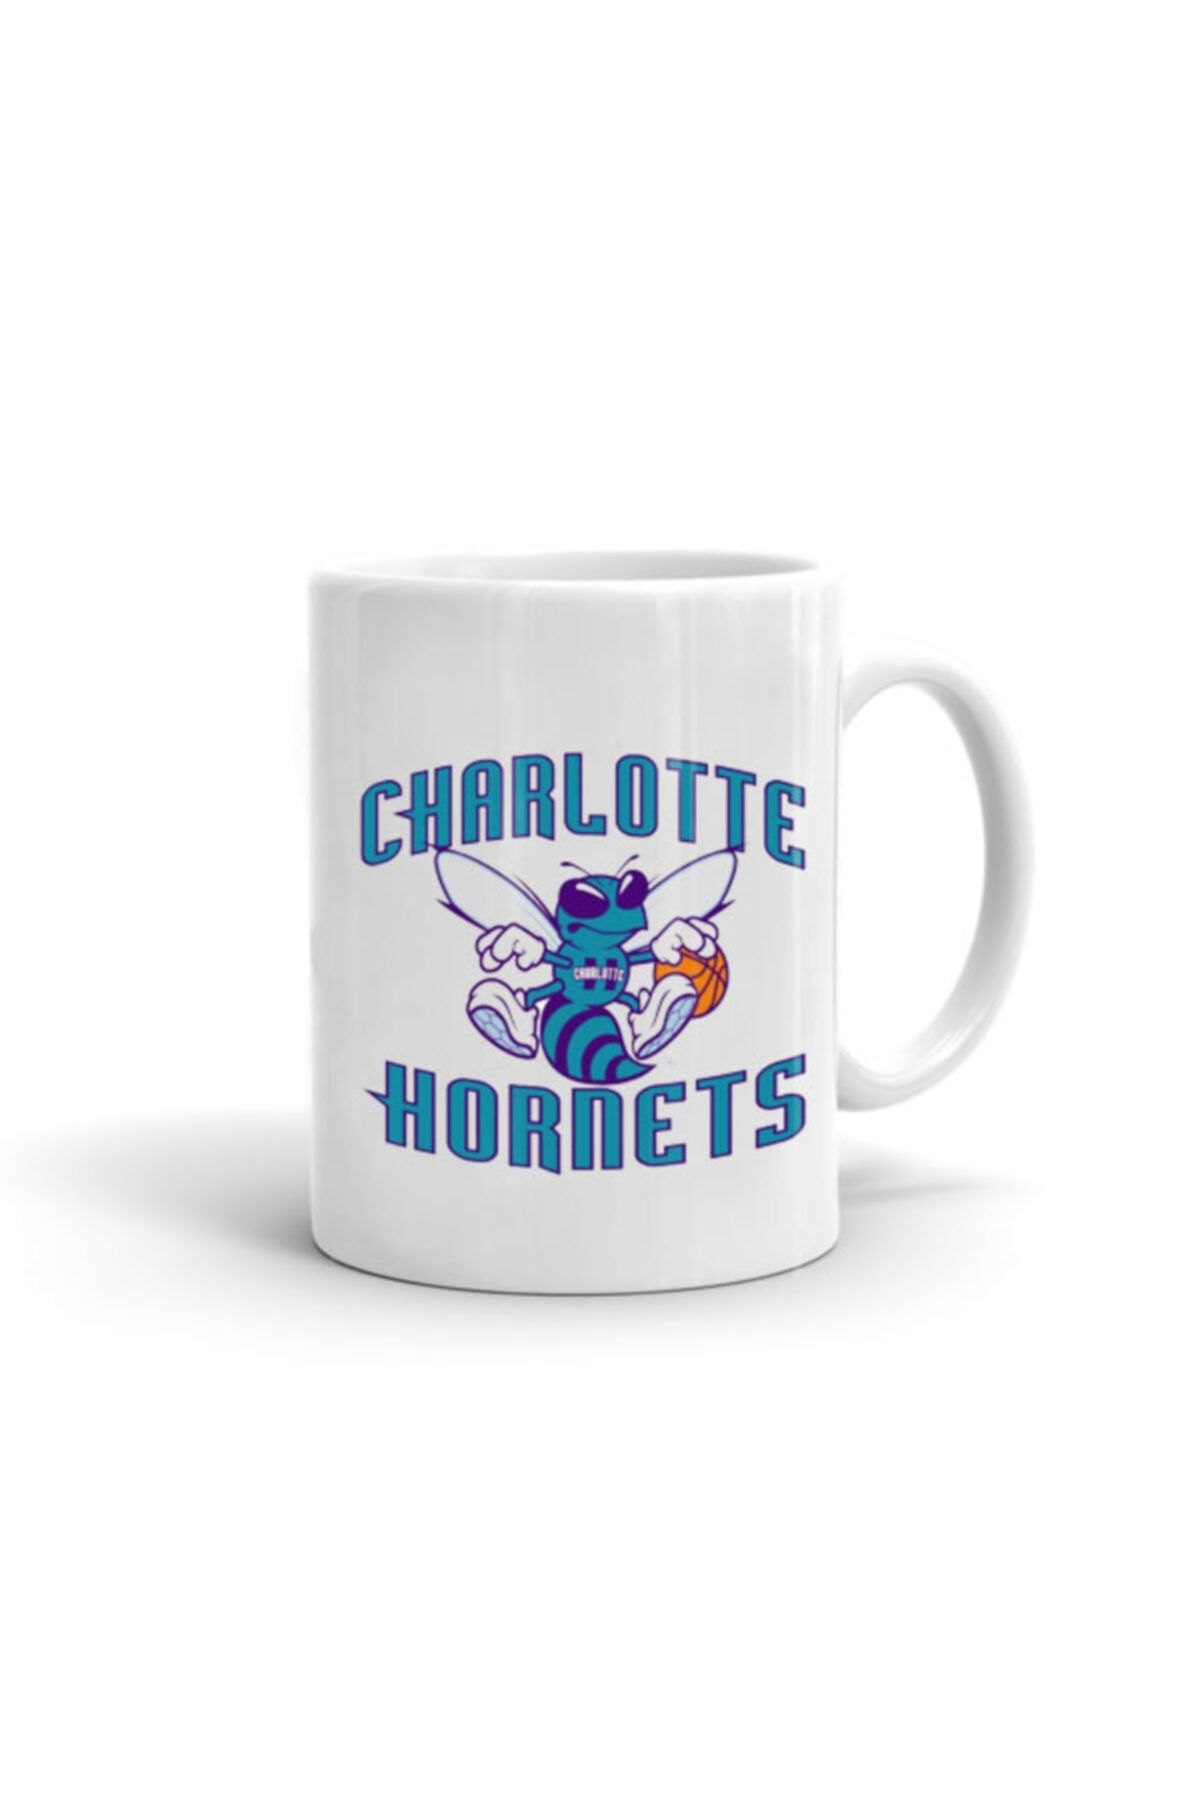 Usateamfans Charlotte Hornets Mug